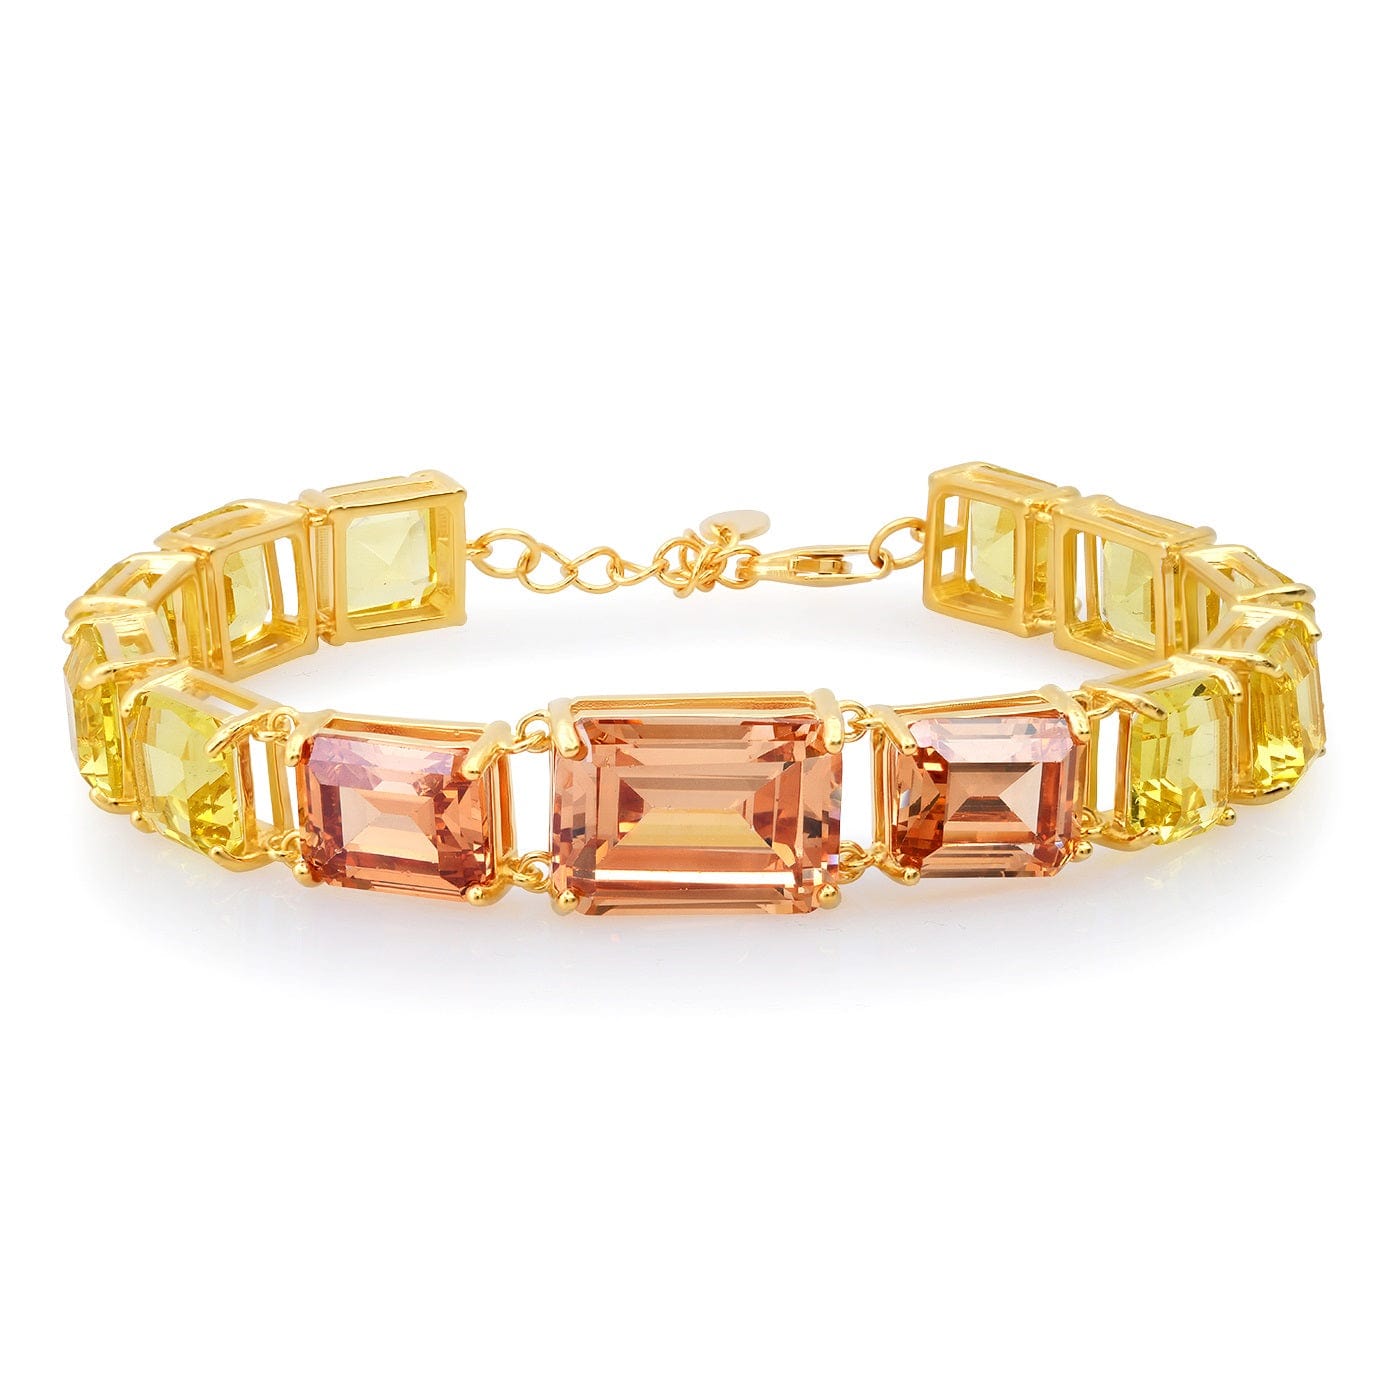 TAI JEWELRY Bracelet Gold Vermeil/Champagne Chunky Emerald Cut Glass Bracelet